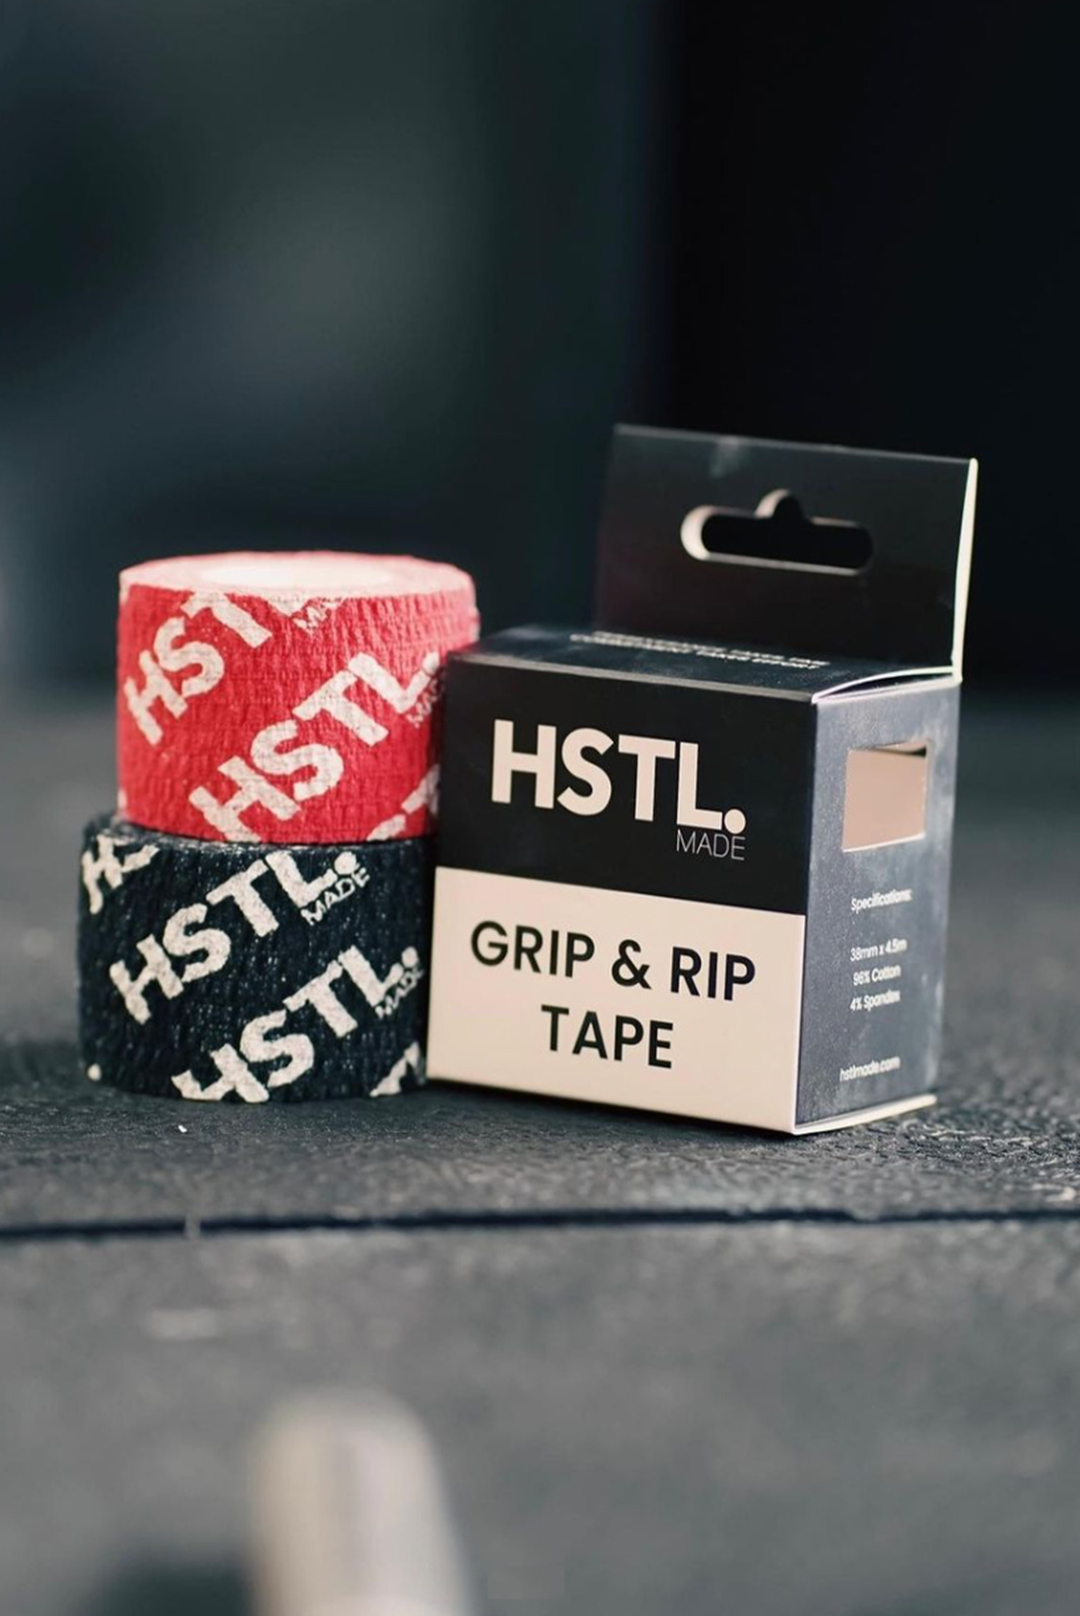 Grip & Rip Tape